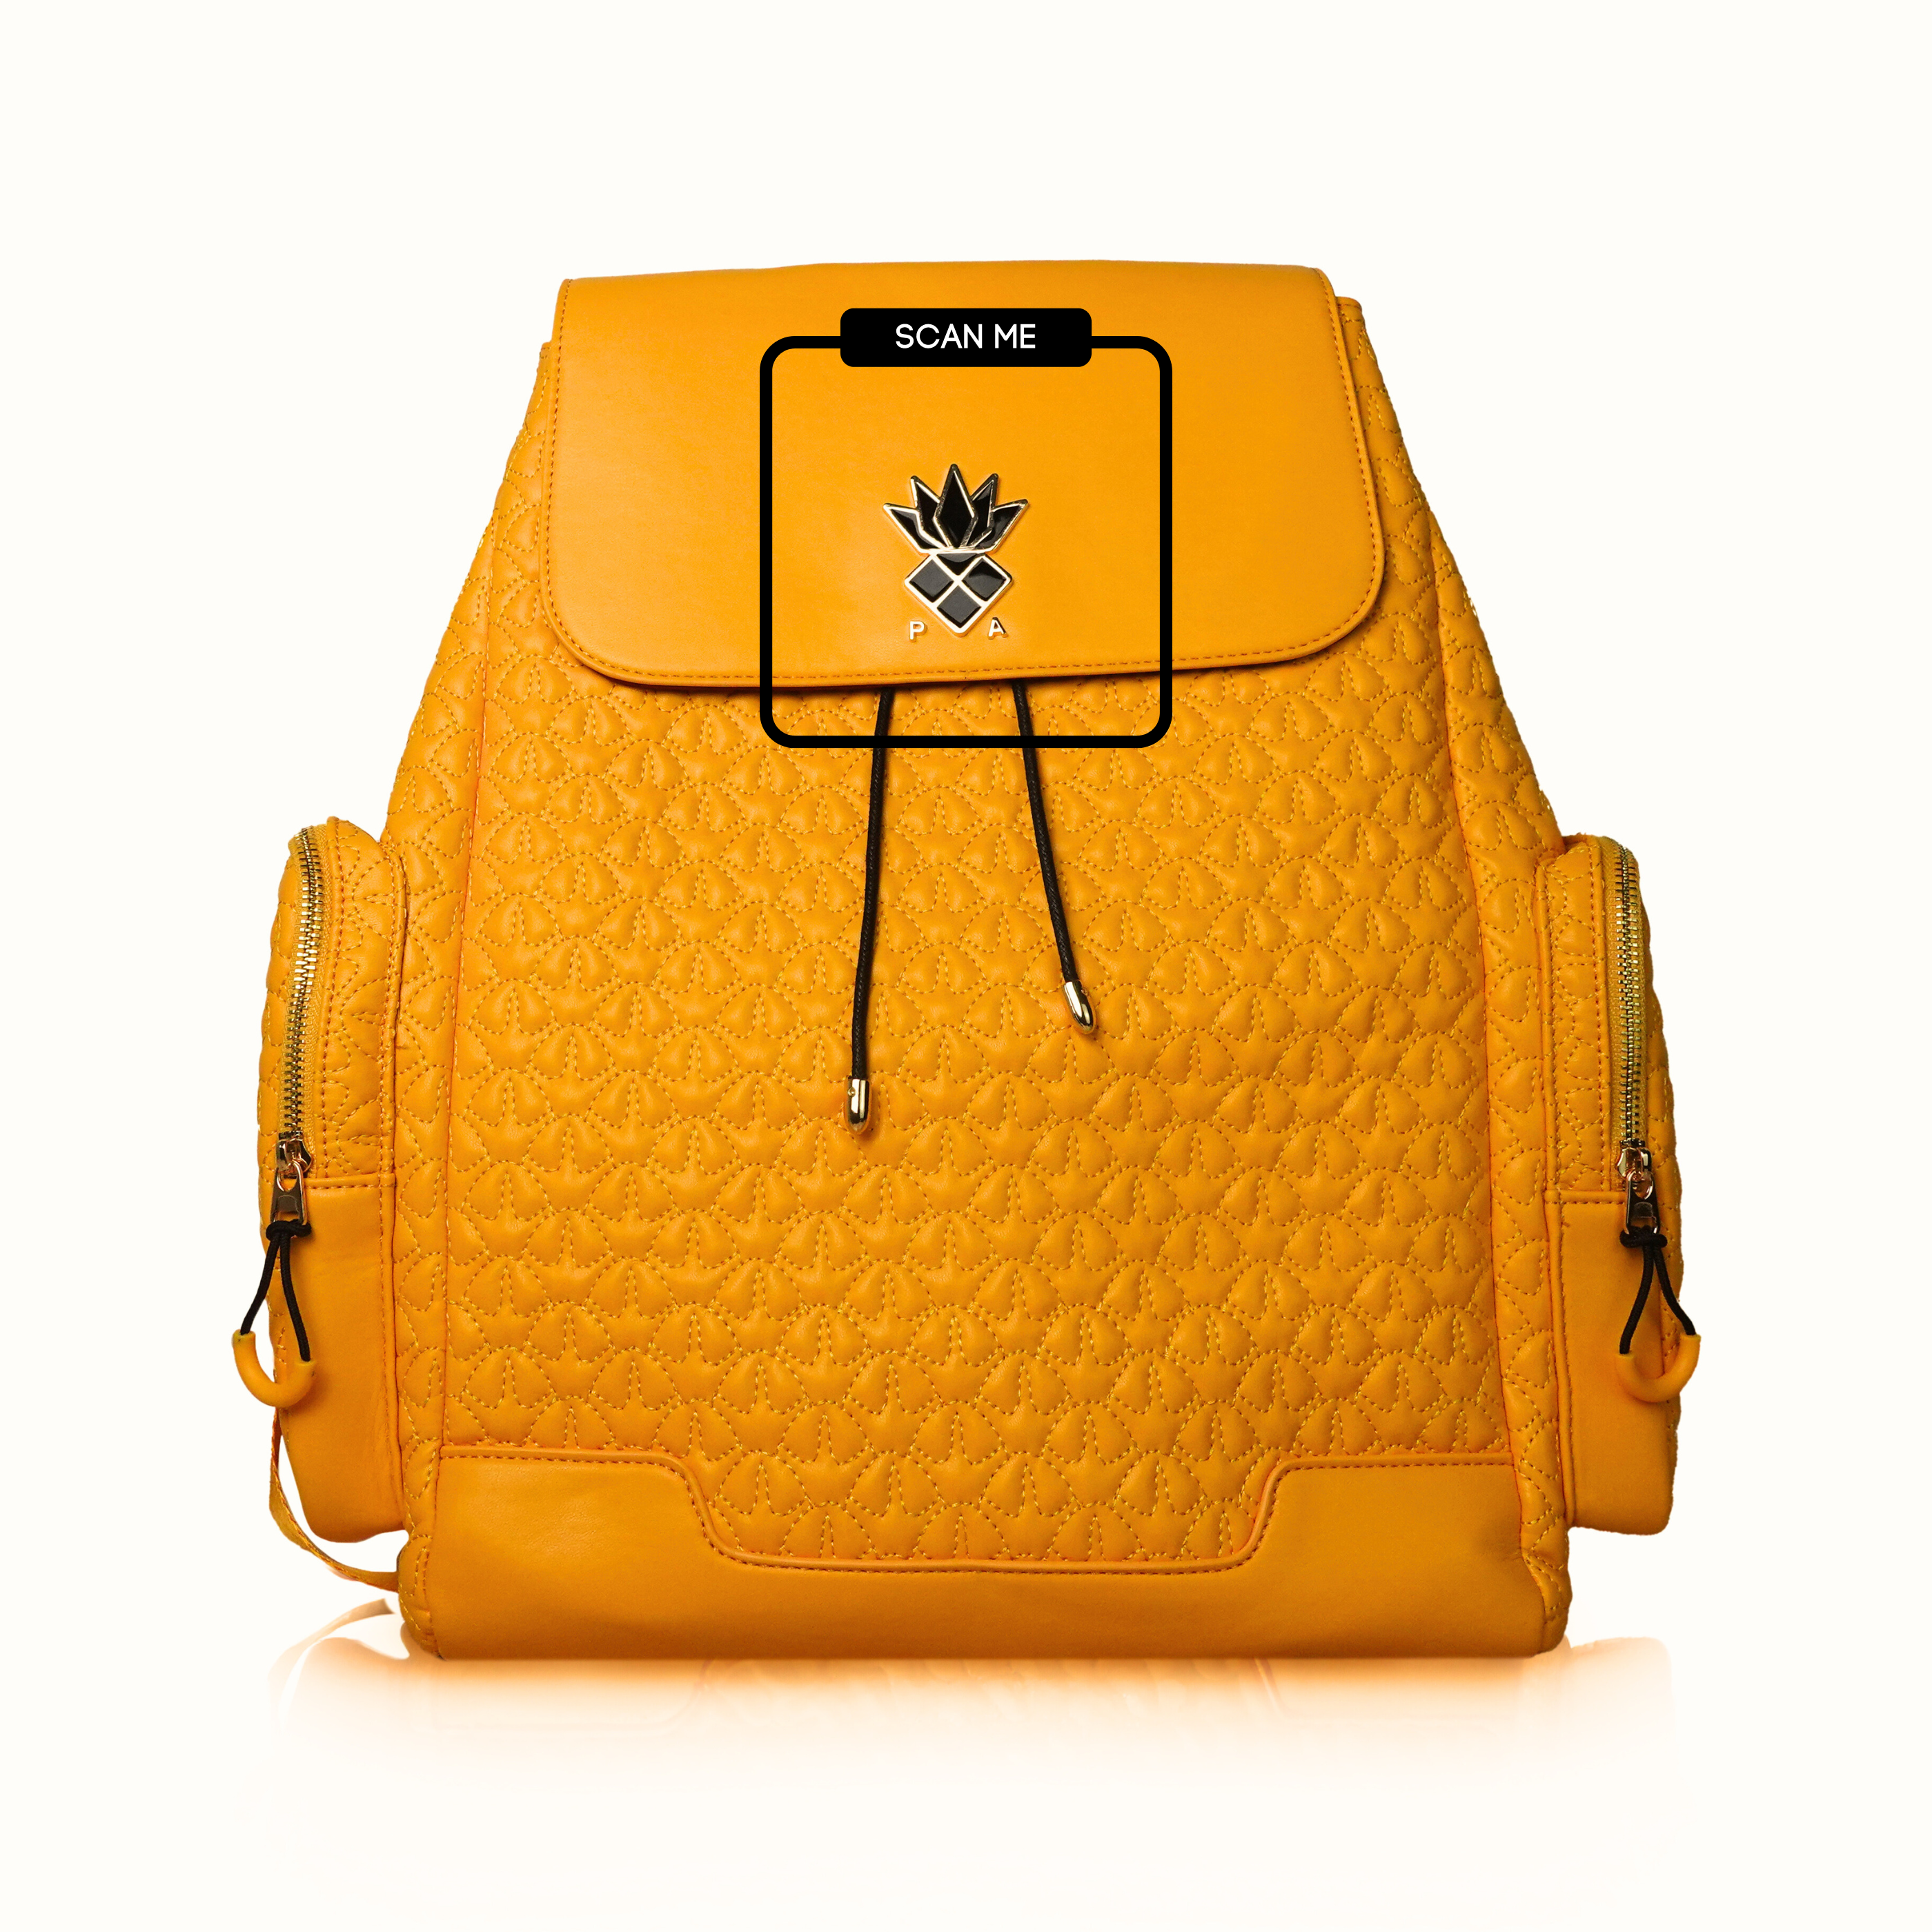 I P B (Interactive Pineapple Bag)